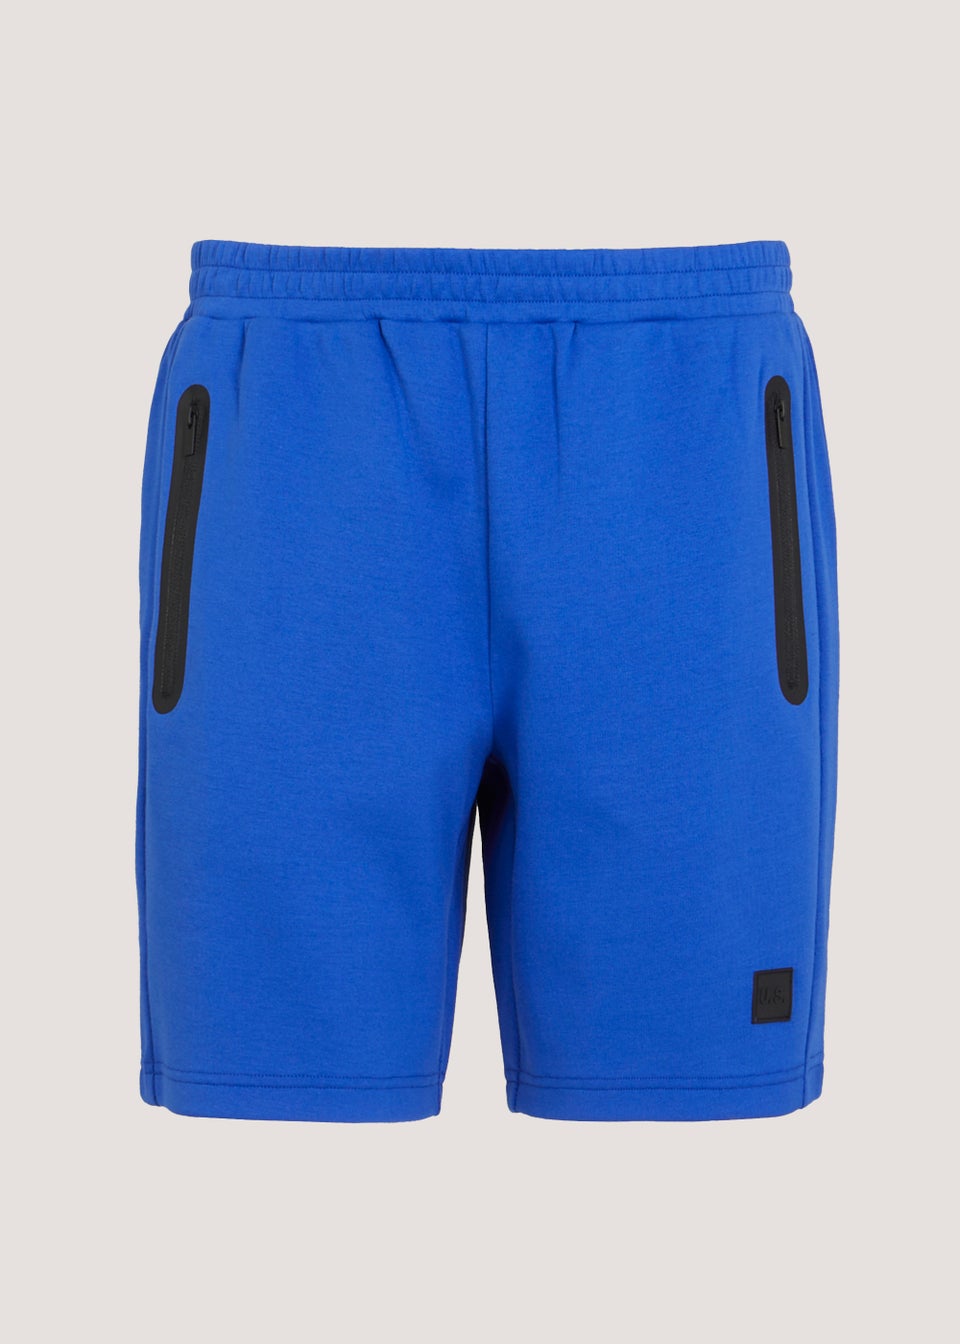 US Athletic Blue Bonded Shorts - Matalan